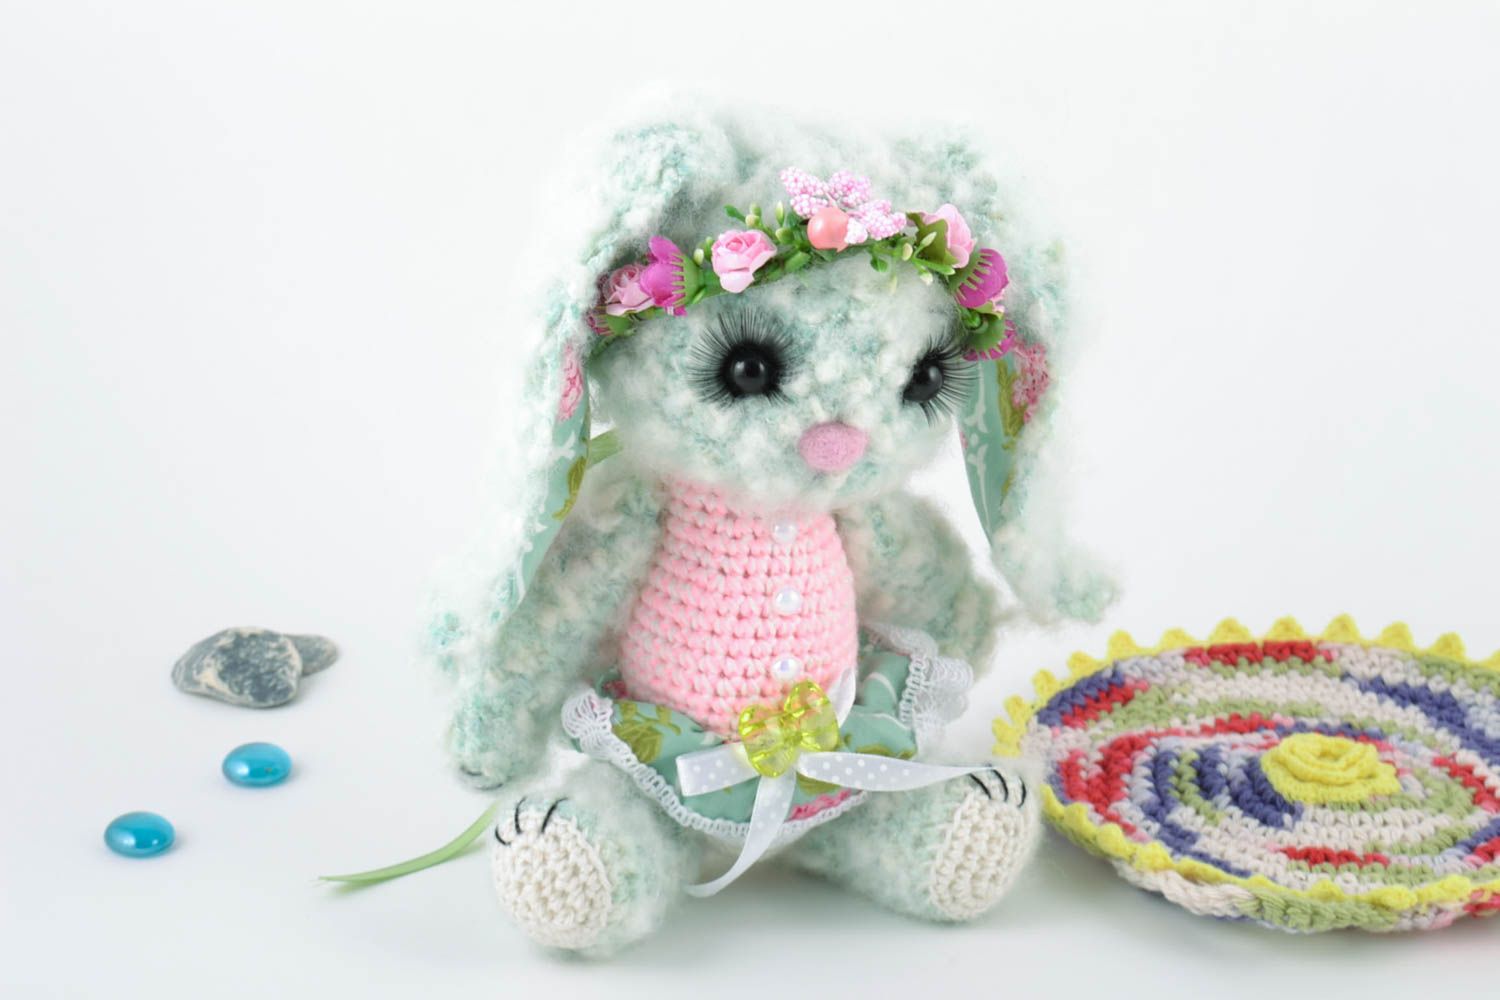 Small nice homemade soft crochet toy hare girl for children photo 1